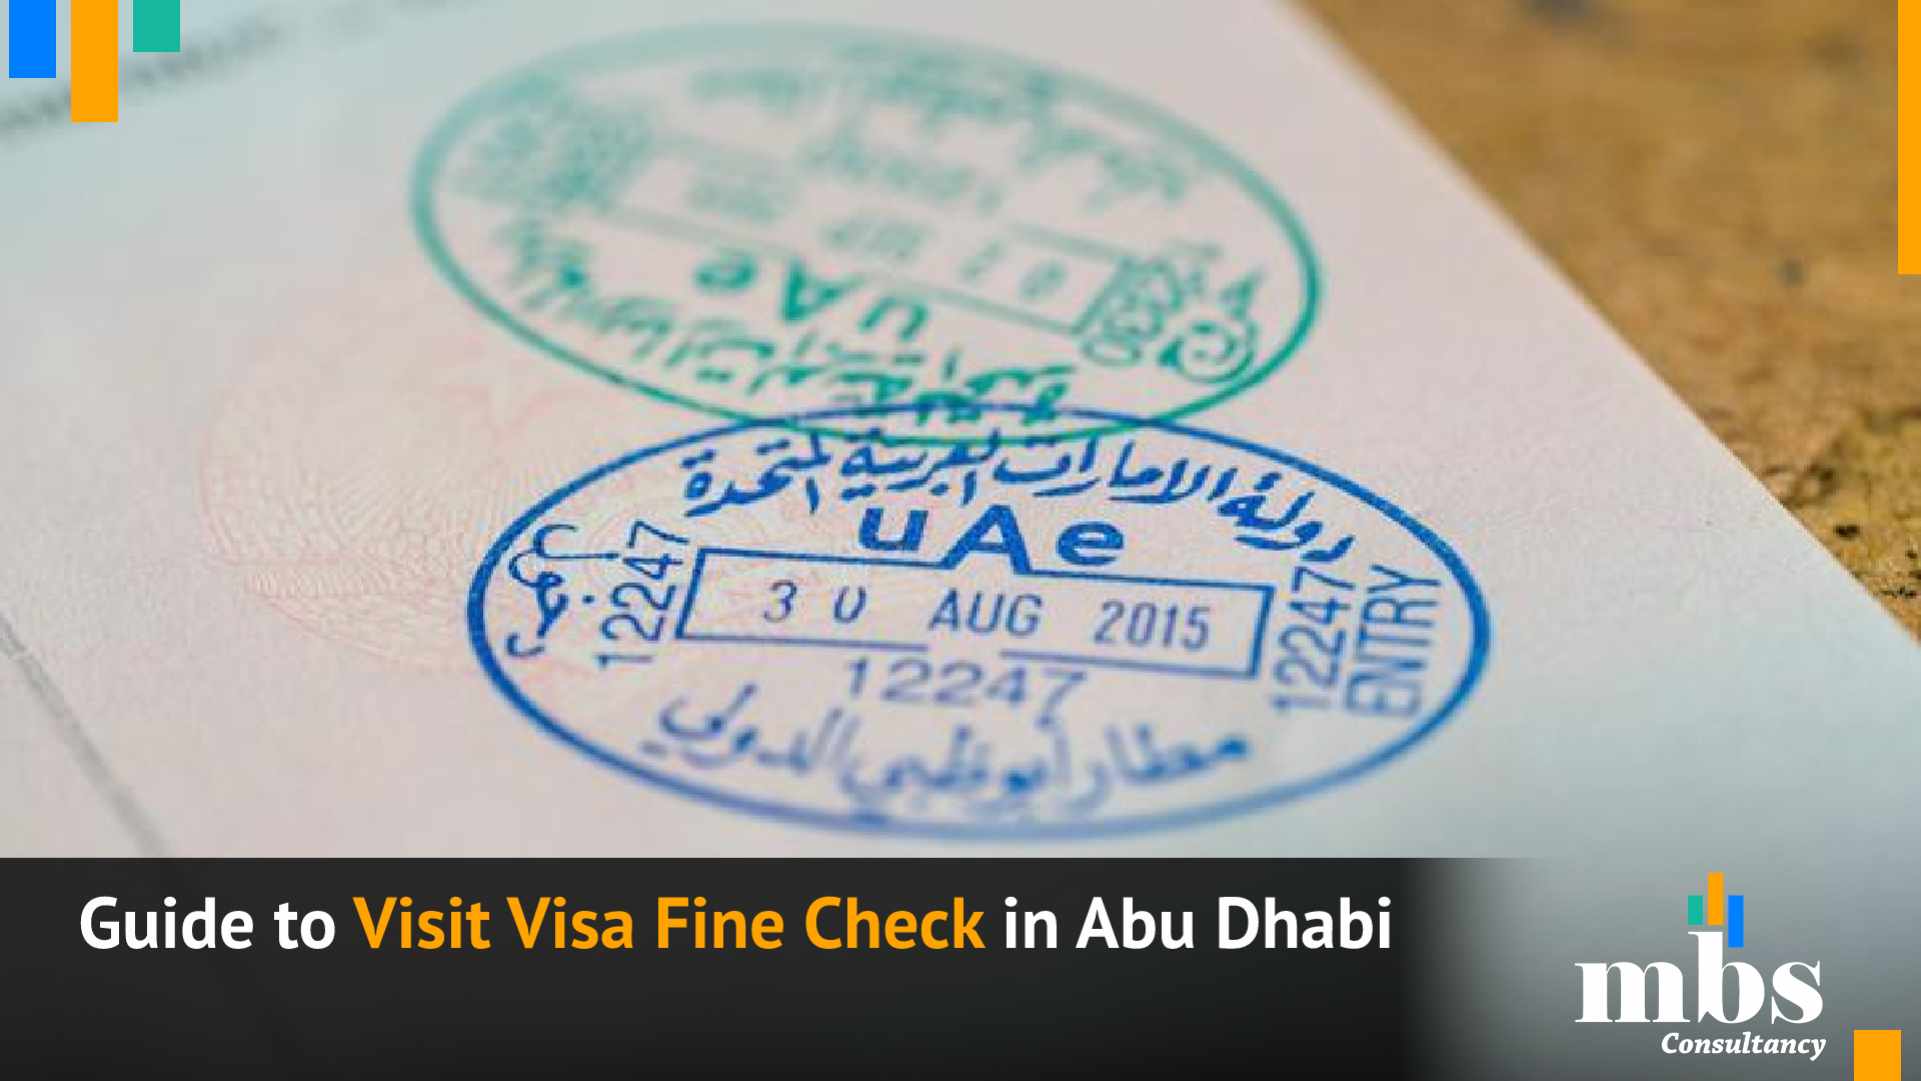 Guide to Visit Visa Fine Check in Abu Dhabi